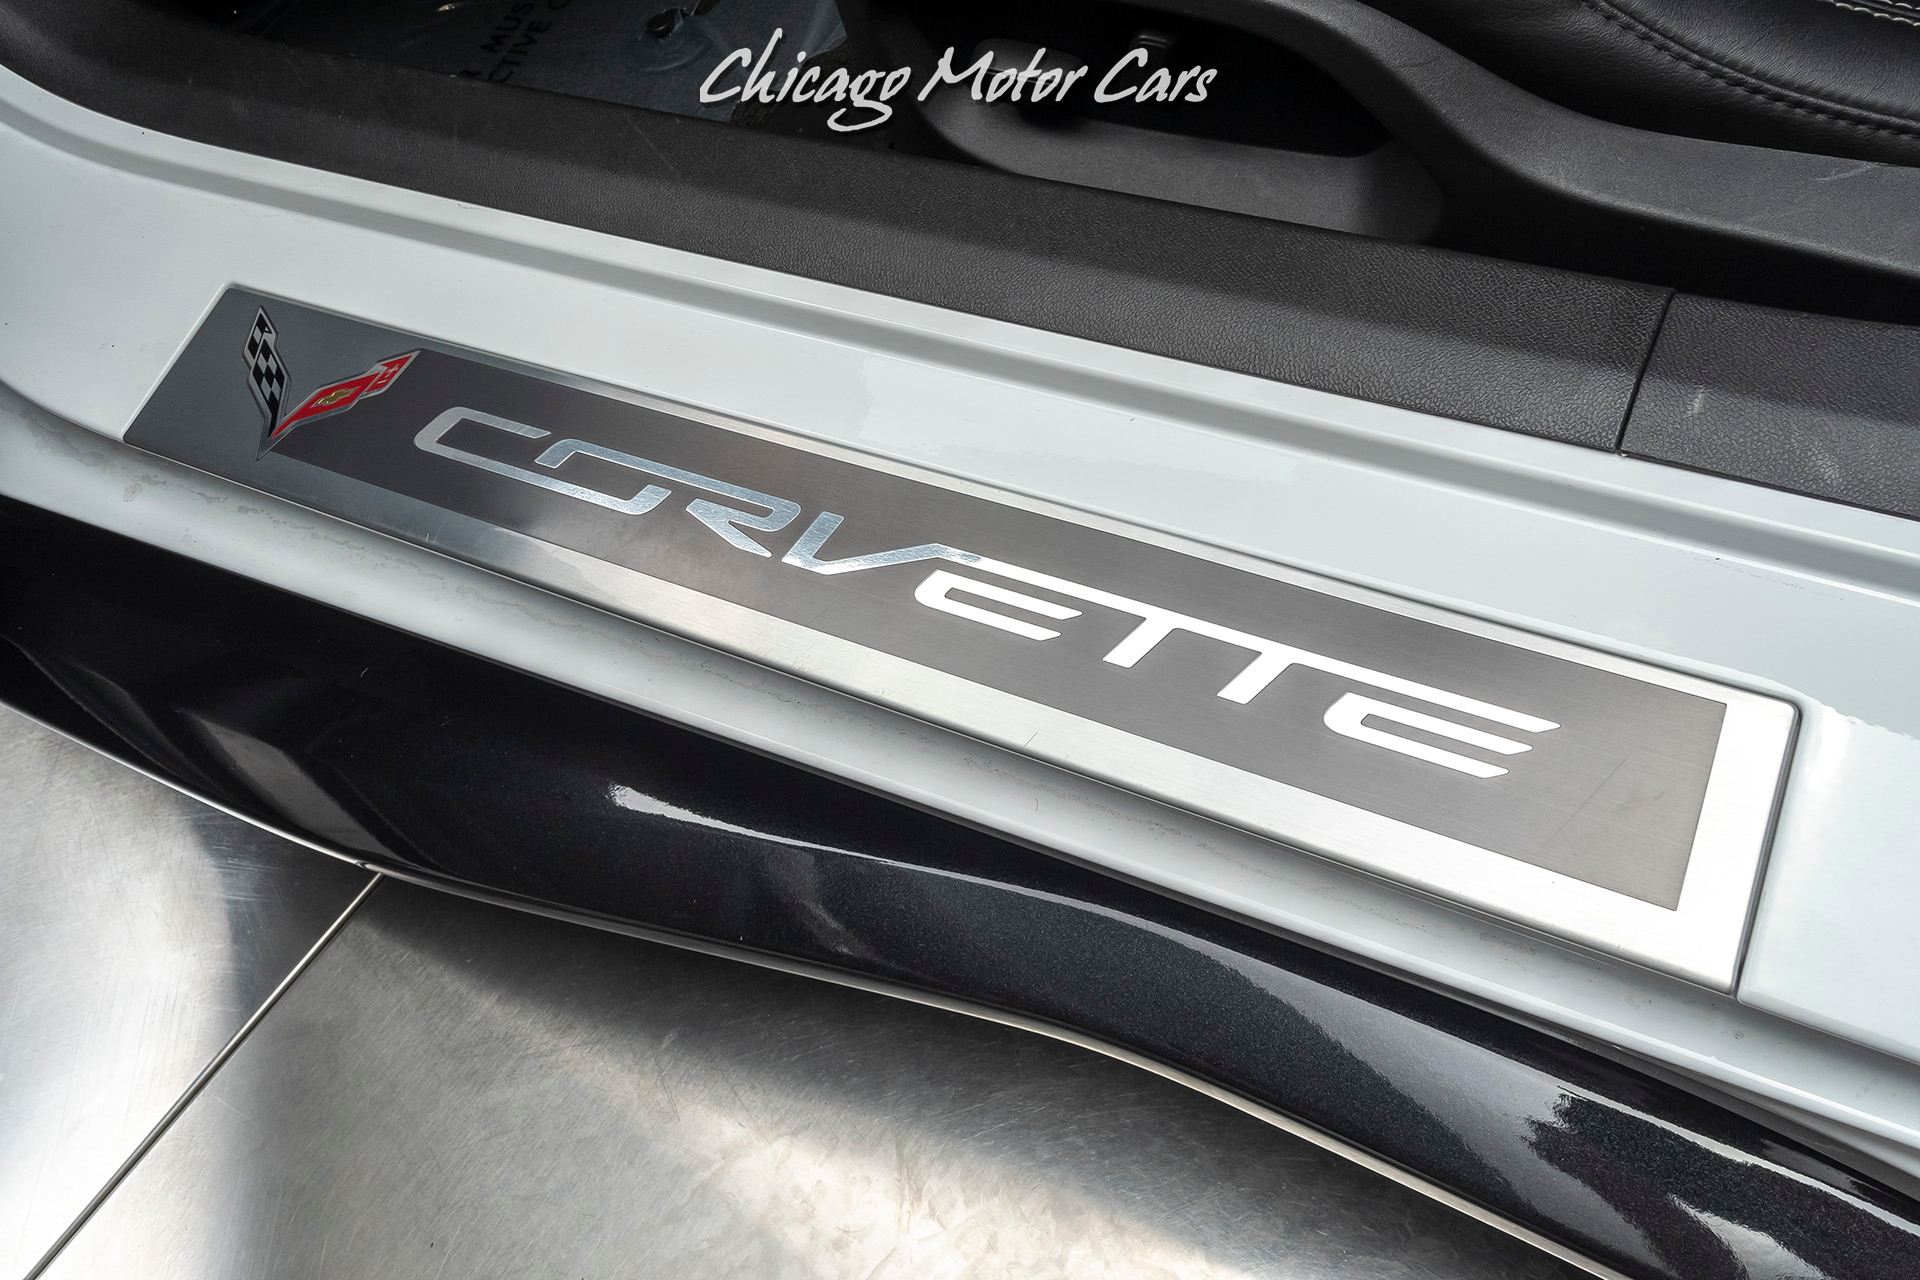 Used-2015-Chevrolet-Corvette-Z06-1LZ-Coupe---TASTEFULLY-MODIFIED-628WHP-Z07-PERFORMANCE-PKG